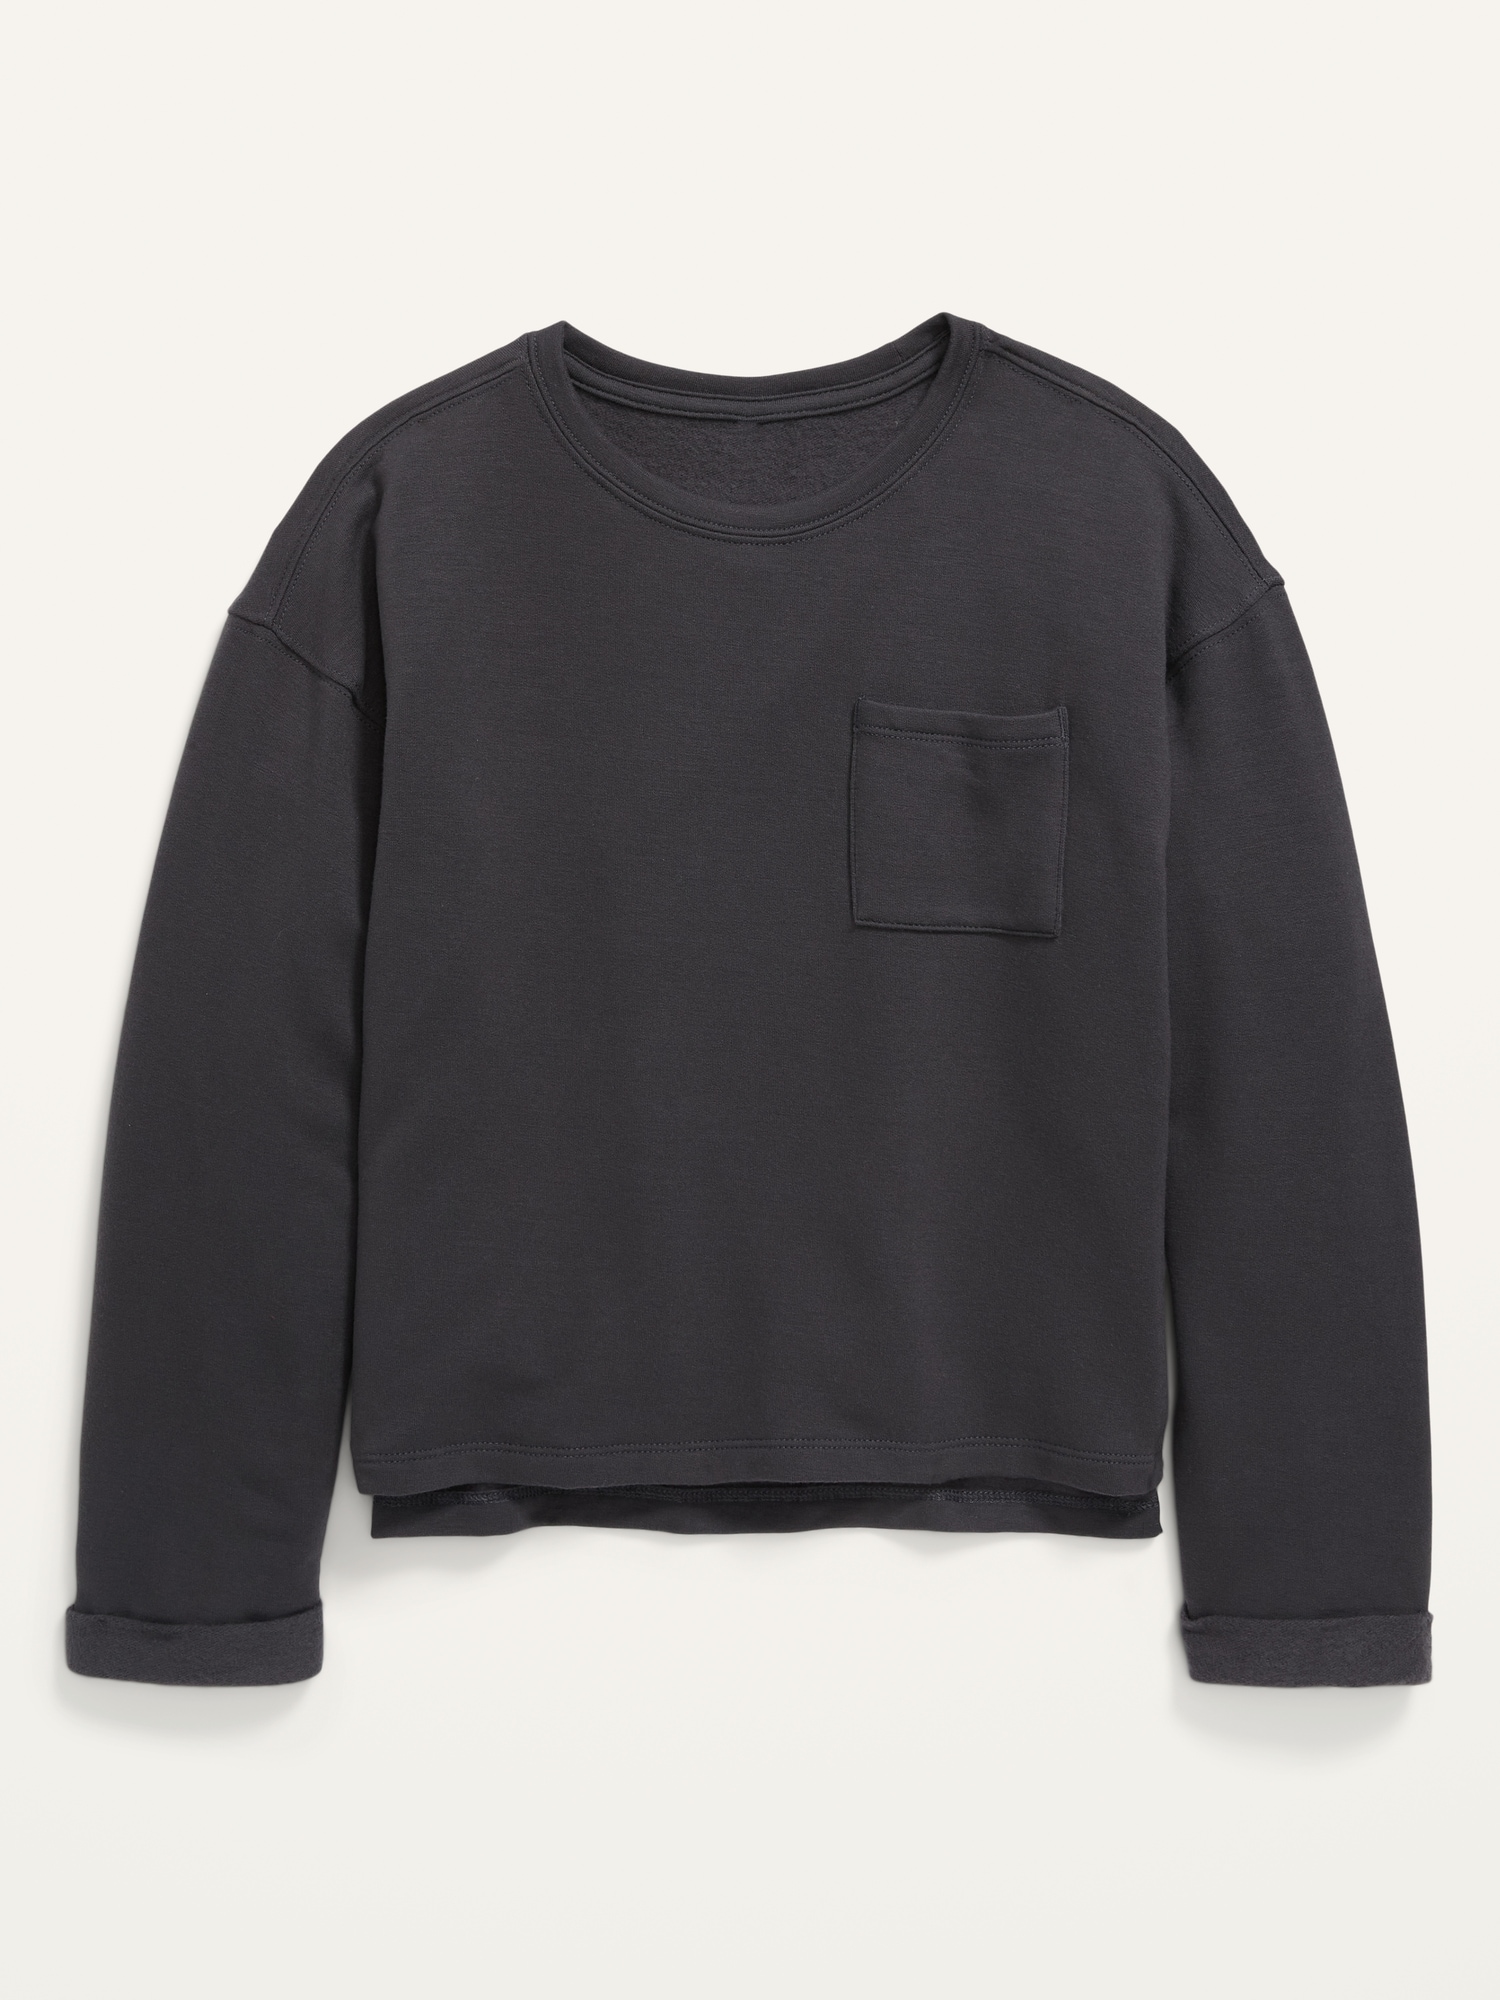 Cozy-Knit Pocket Sweatshirt for Girls | Old Navy